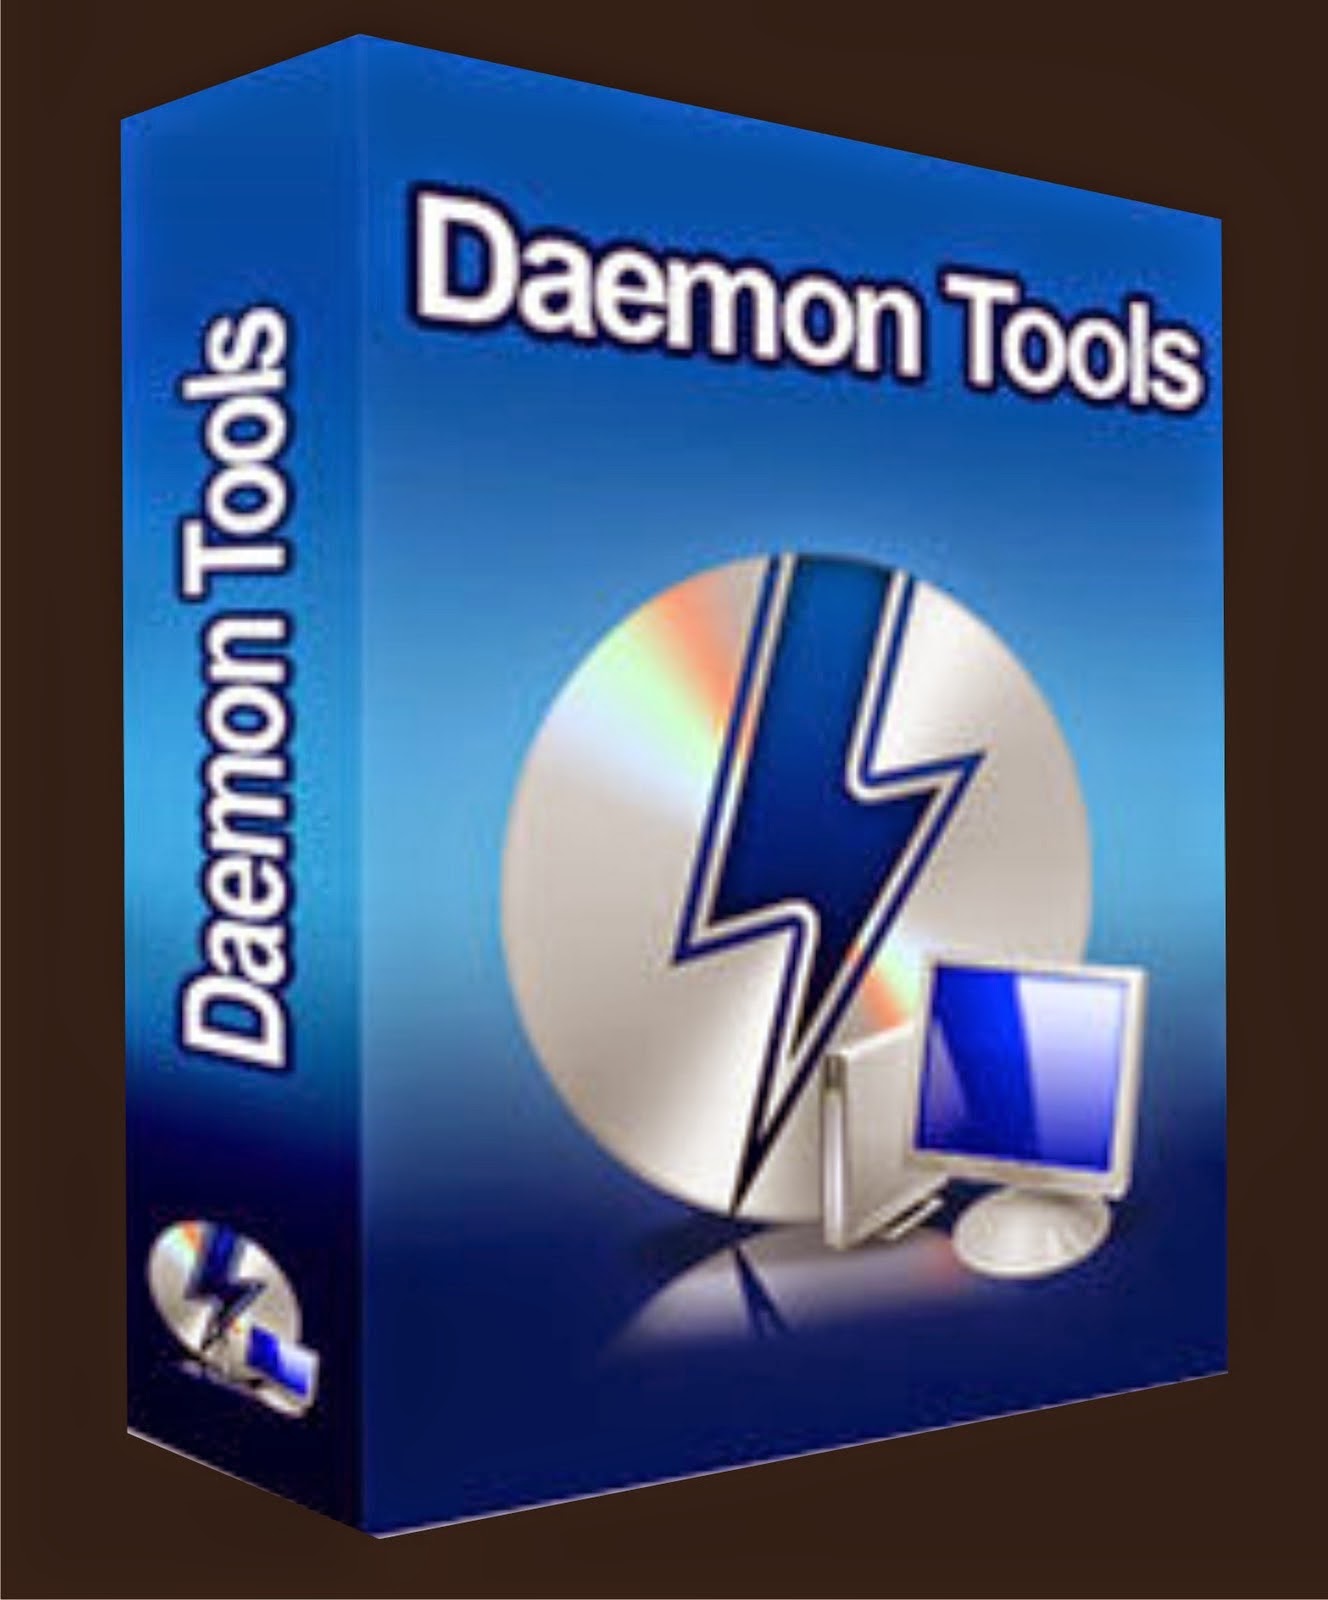 daemon tools pro free download for windows 7 64 bit